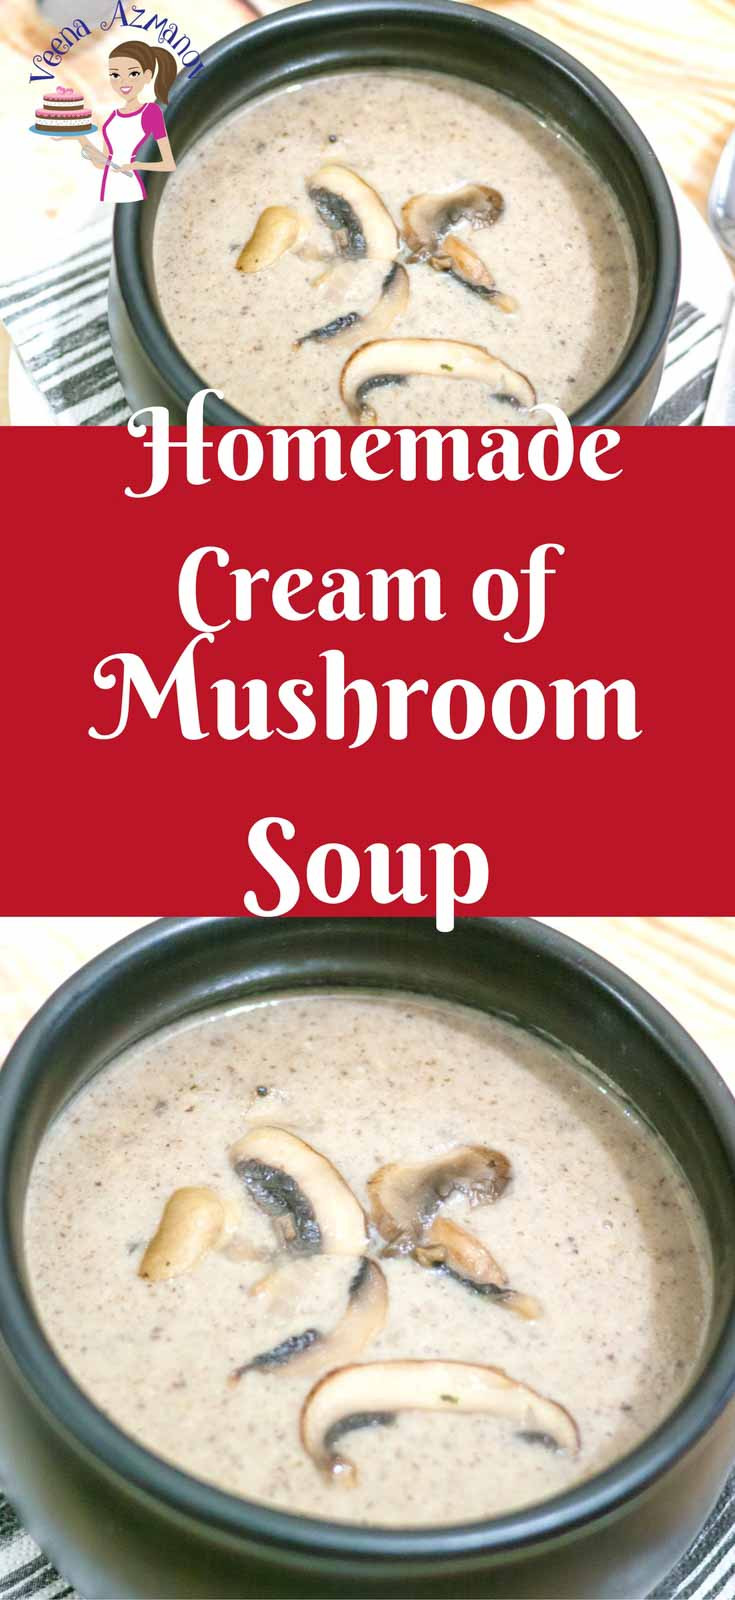 Best ideas about DIY Cream Of Mushroom Soup
. Save or Pin Easy Homemade Cream of Mushroom Soup Veena Azmanov Now.